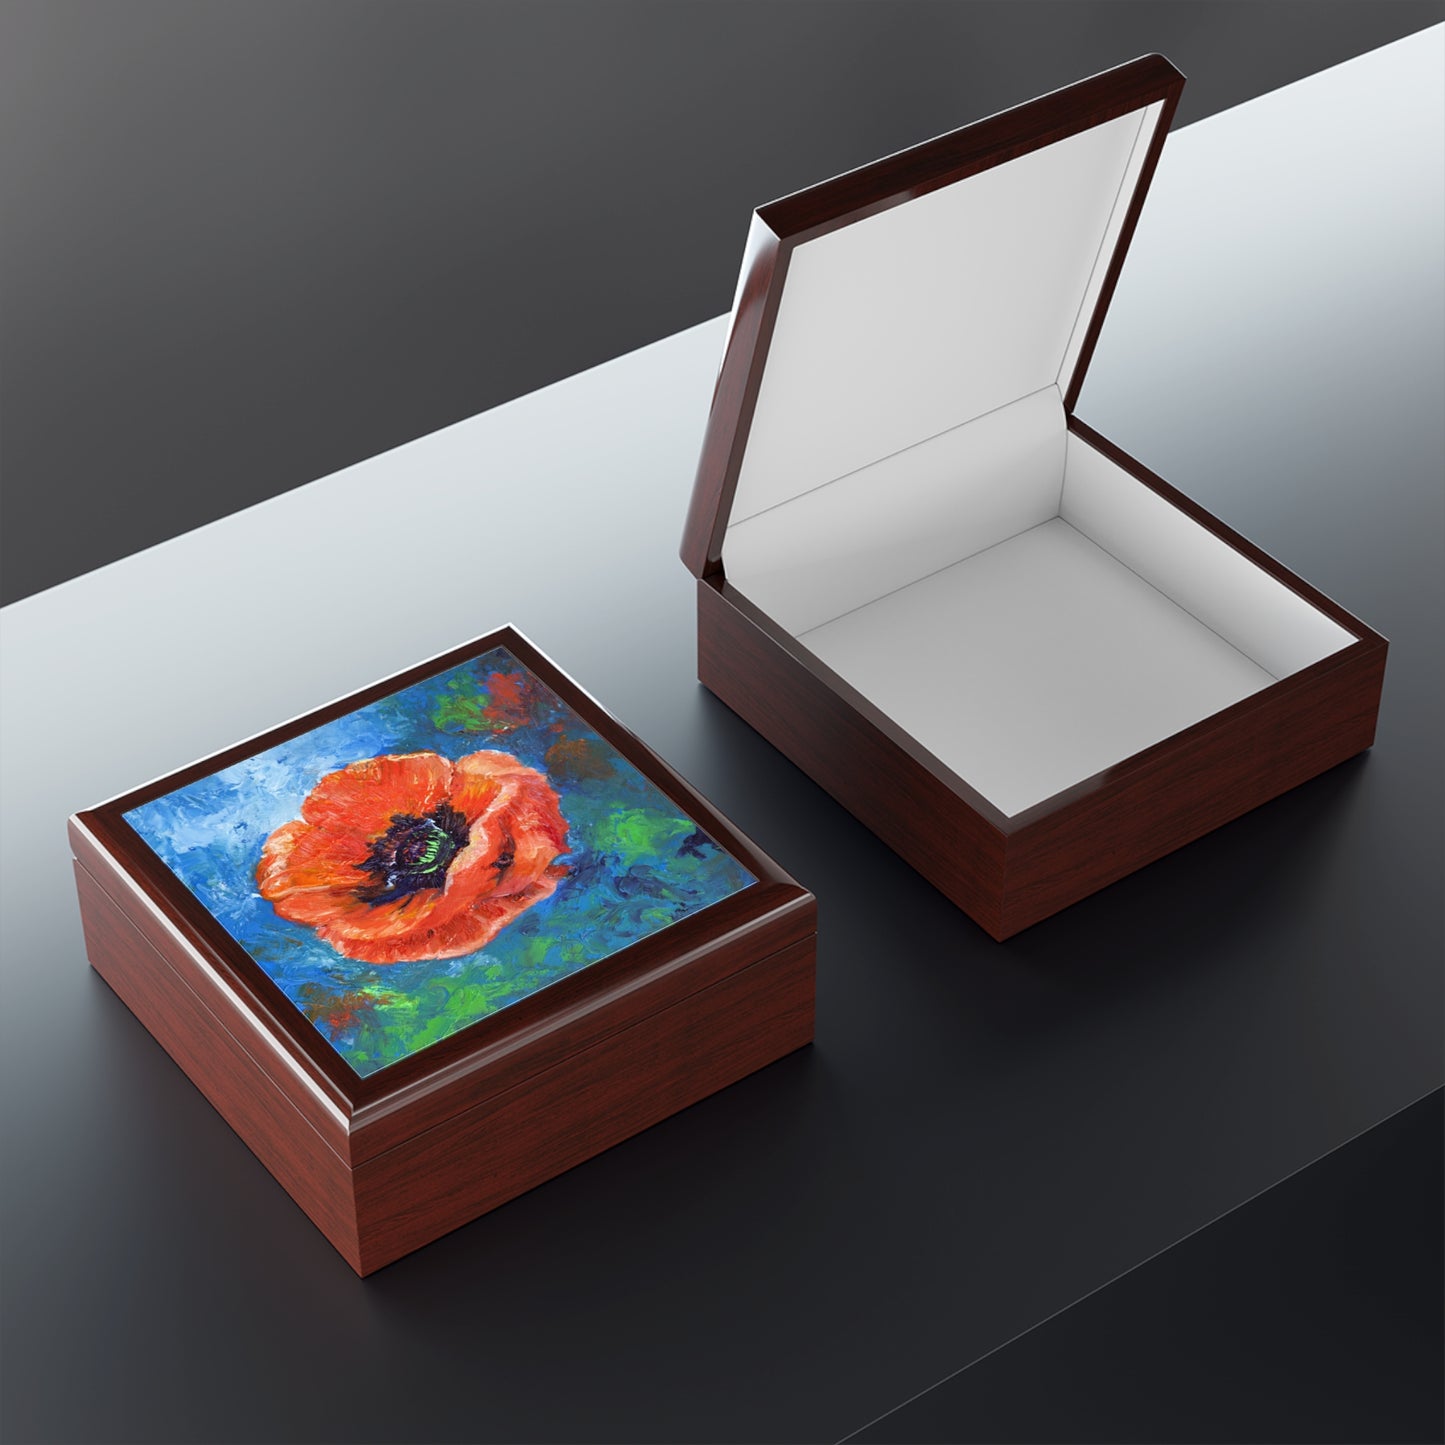 Keepsake/Jewelry Box - Poppy Flower Ceramic Tile Lid interior